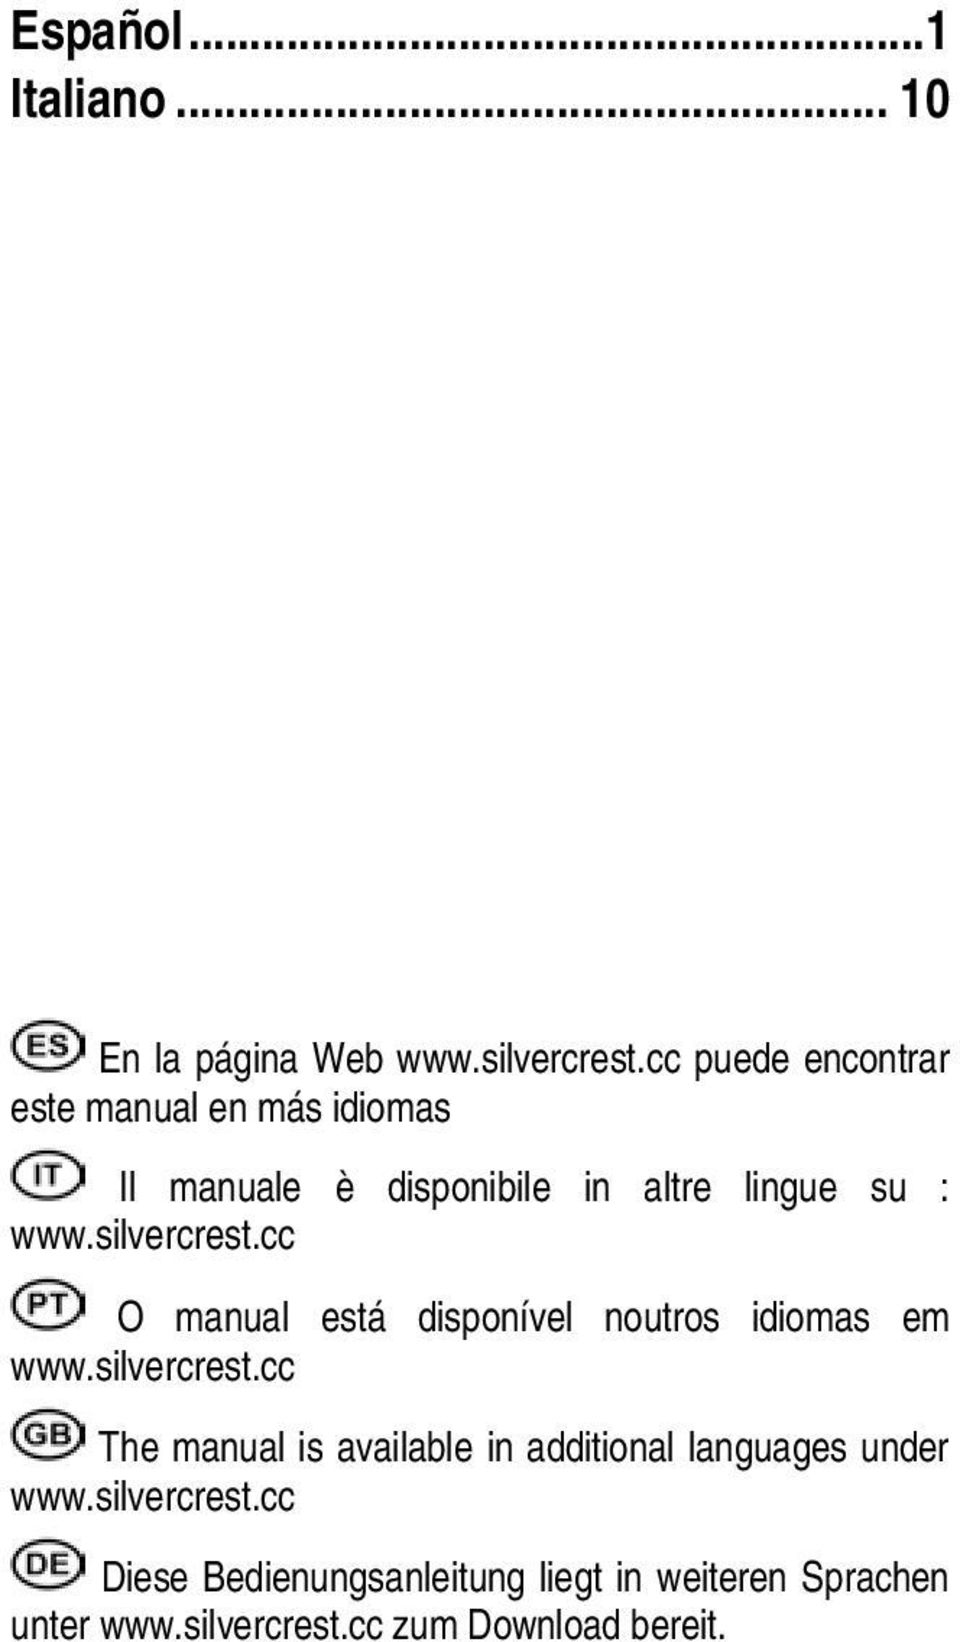 silvercrest.cc O manual está disponível noutros idiomas em www.silvercrest.cc The manual is available in additional languages under www.